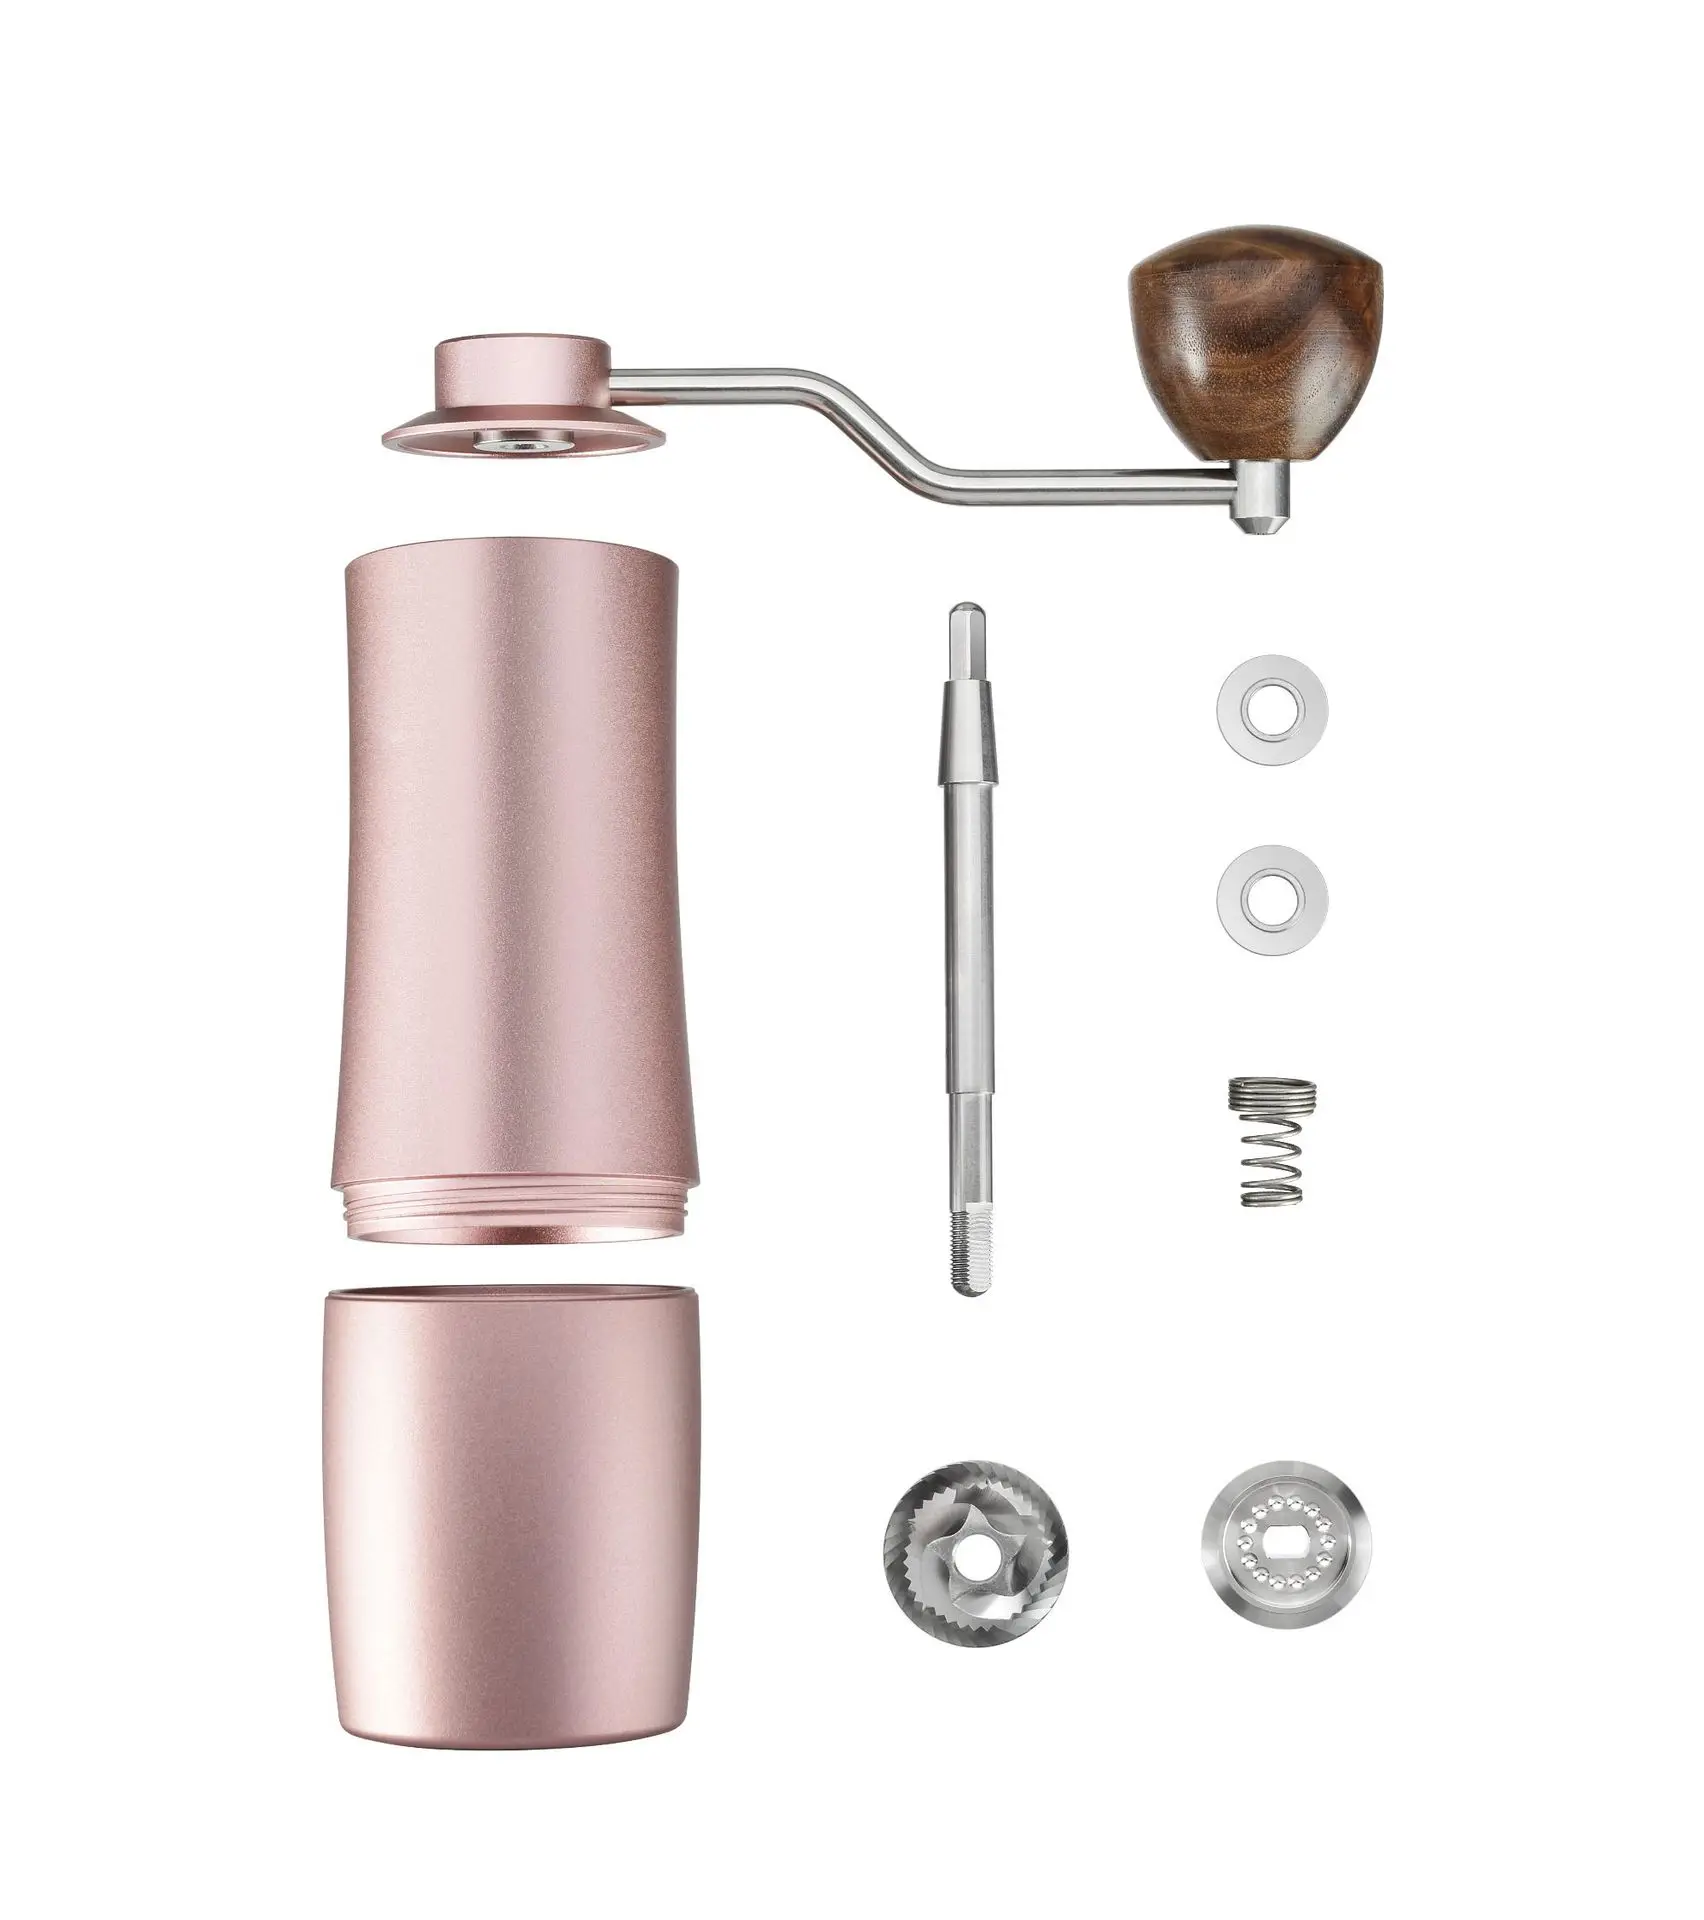 Portable Adjustable Manual Coffee Grinder | Kitchen Tools